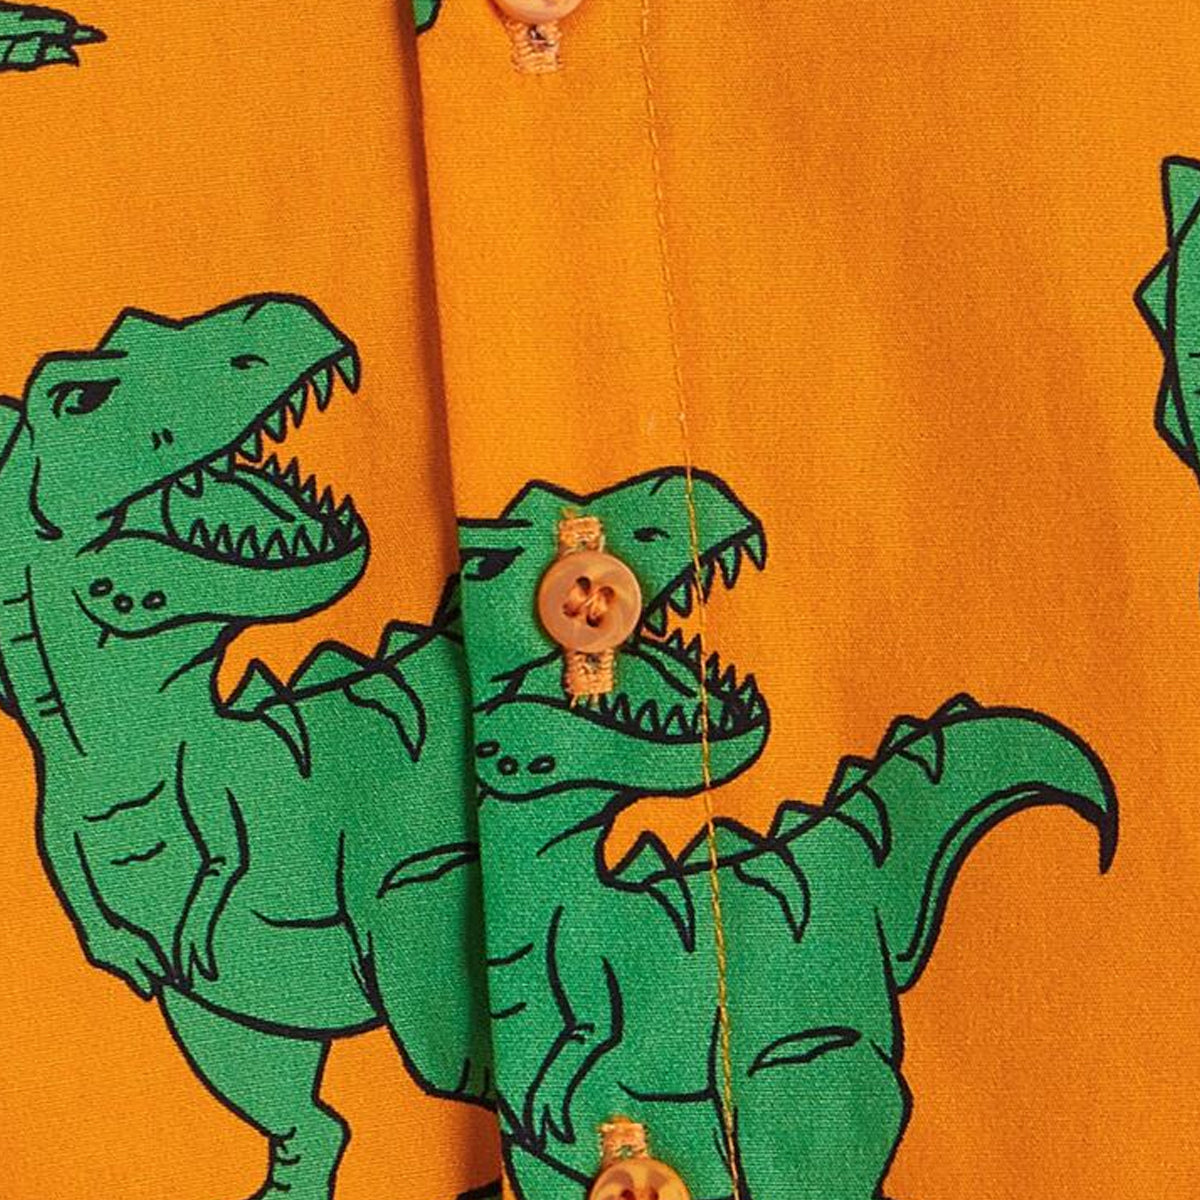 Venutaloza Toddler Boys Dinosaur Casual Printed Shirt & Shorts Without tee Two Piece Set.